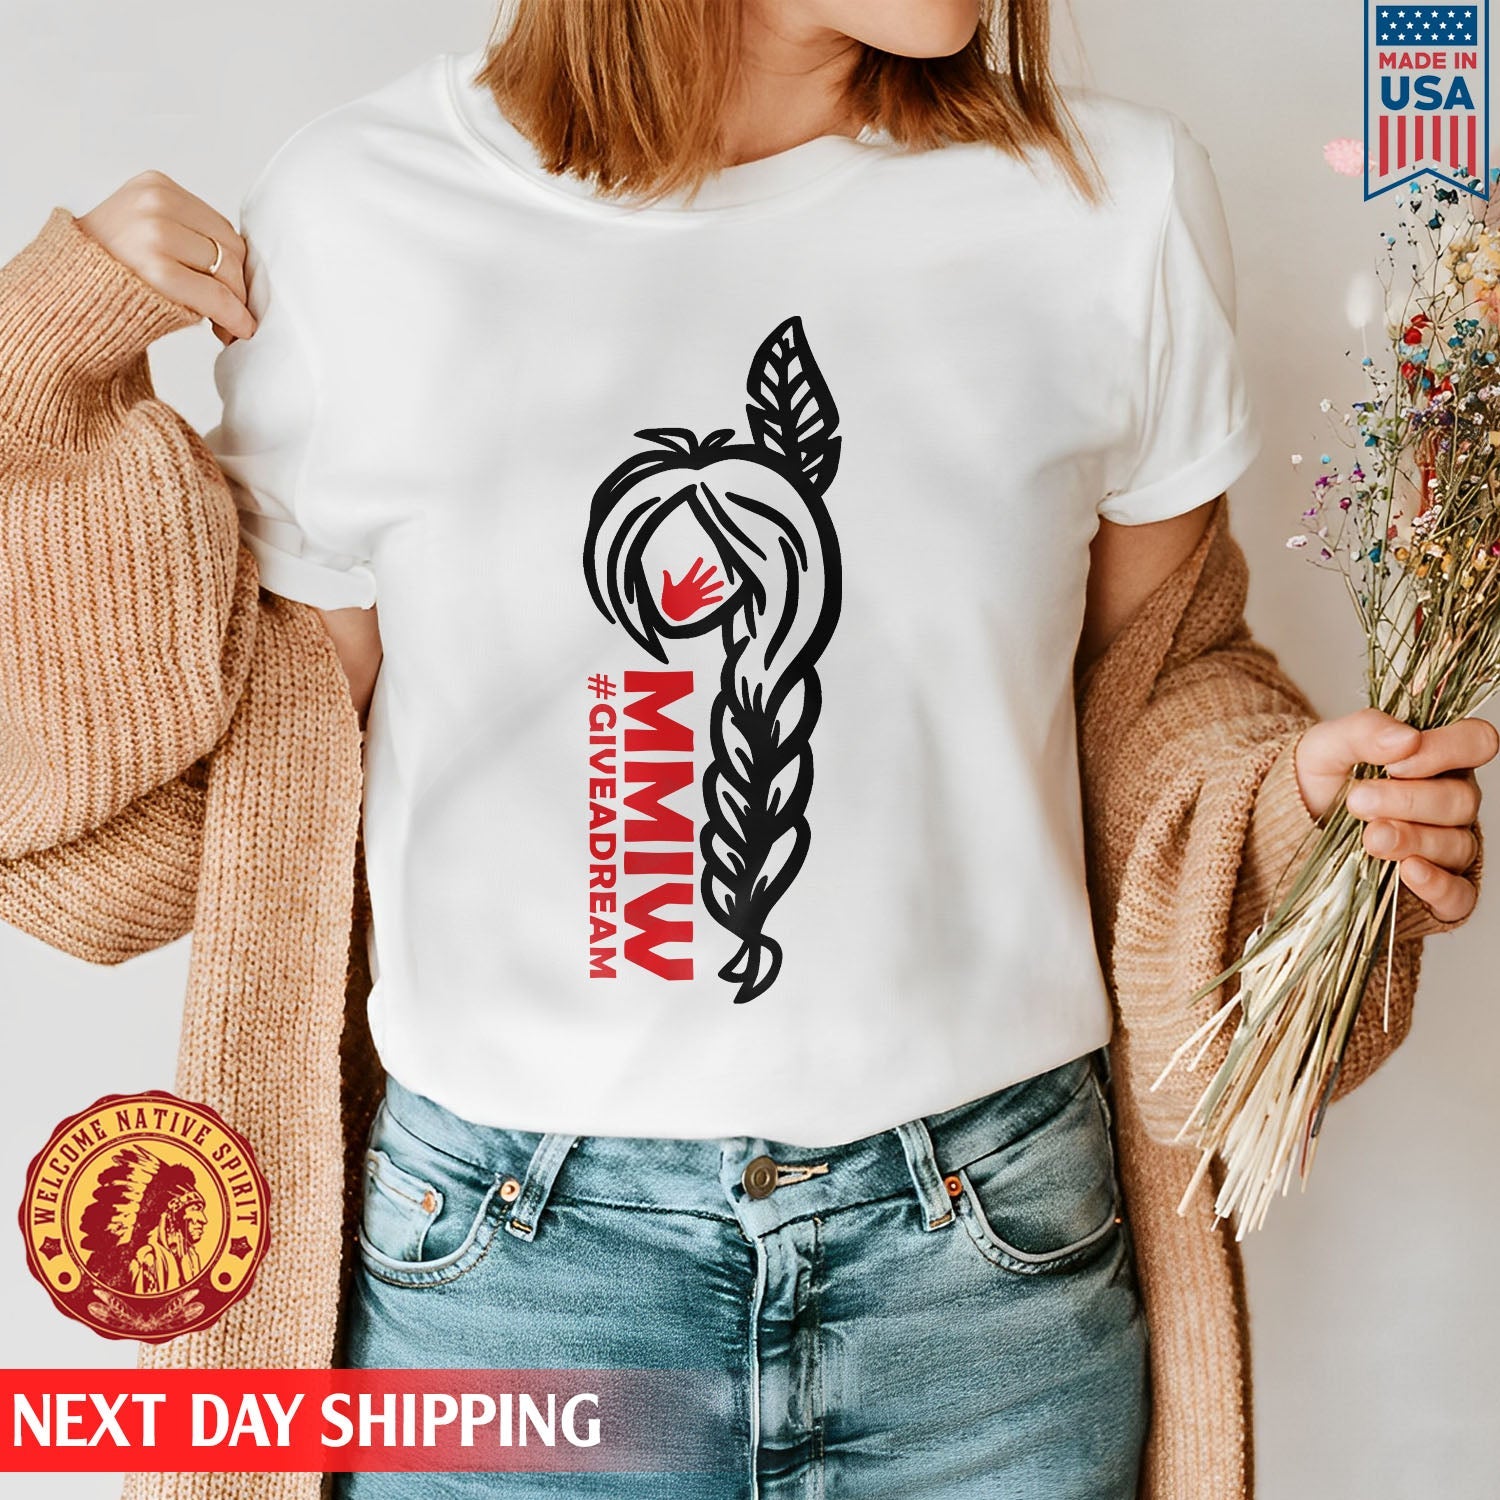 Give A Dream MMIW Native Girl Unisex T-Shirt/Hoodie/Sweatshirt